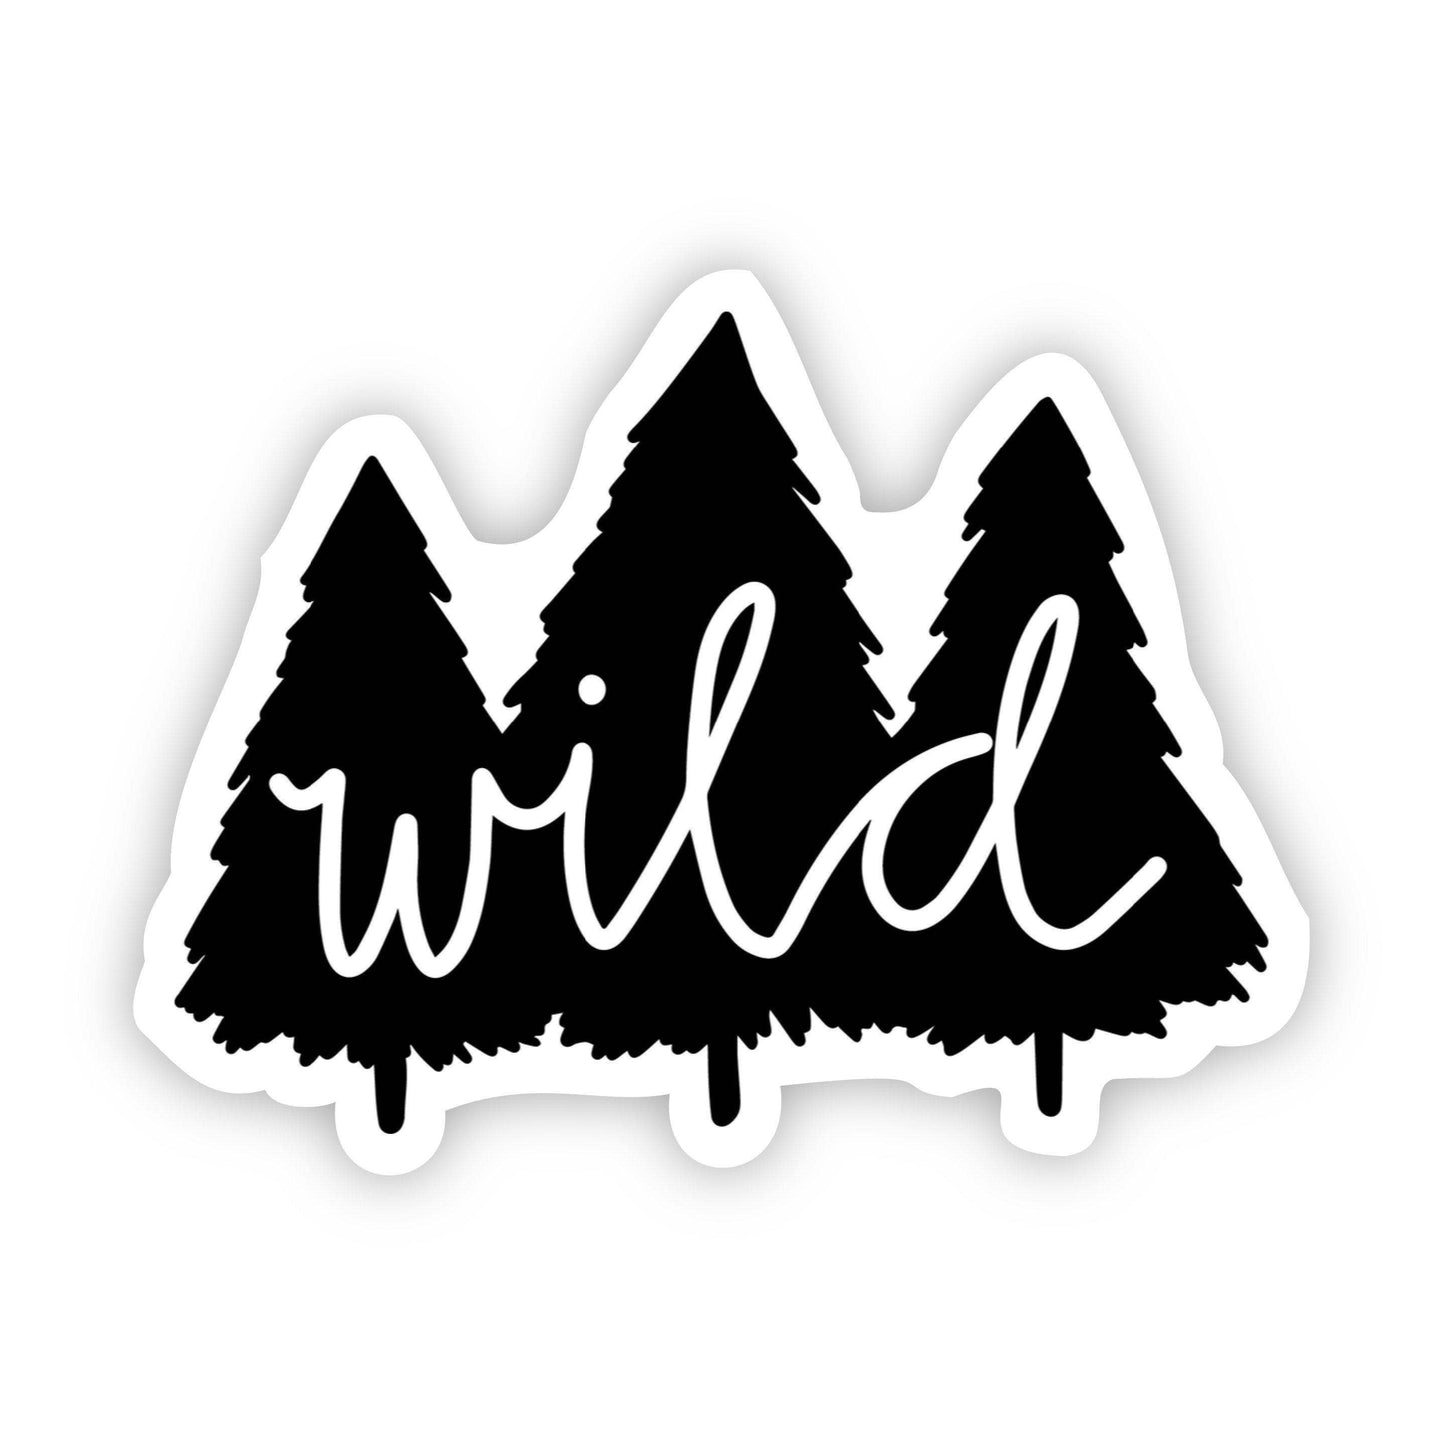 Wild Trees Black and White Nature Sticker